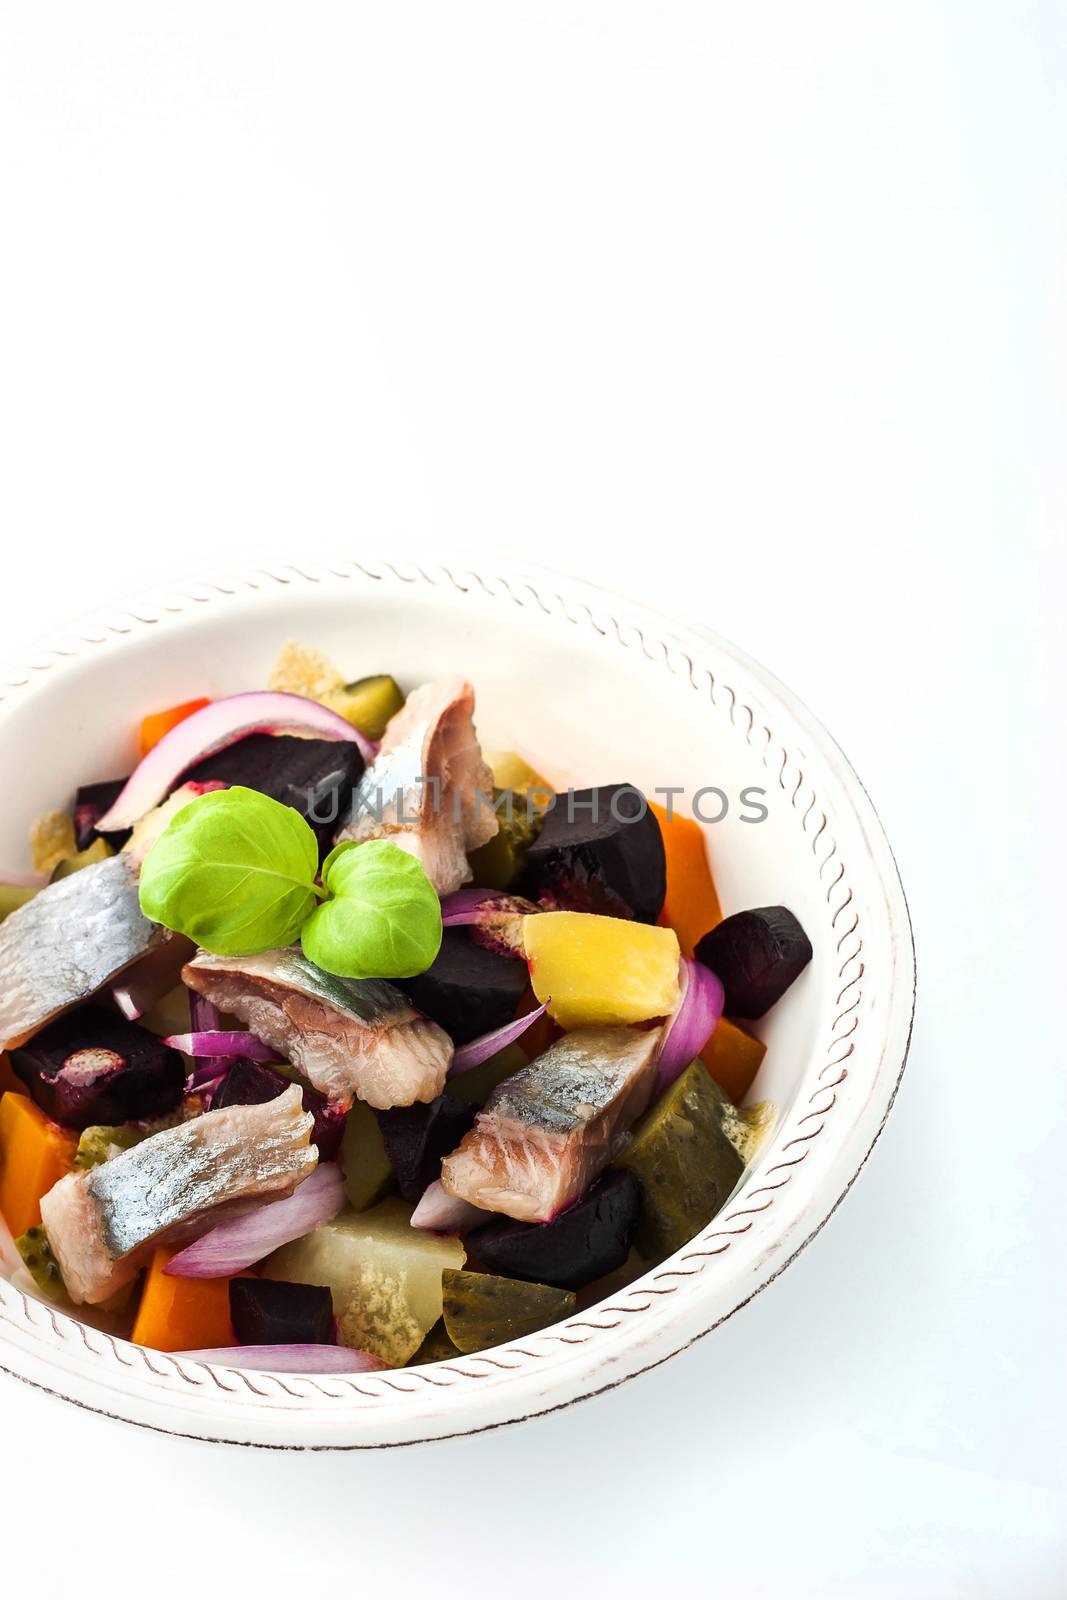 Beet and herring salad on the white dish by Deniskarpenkov